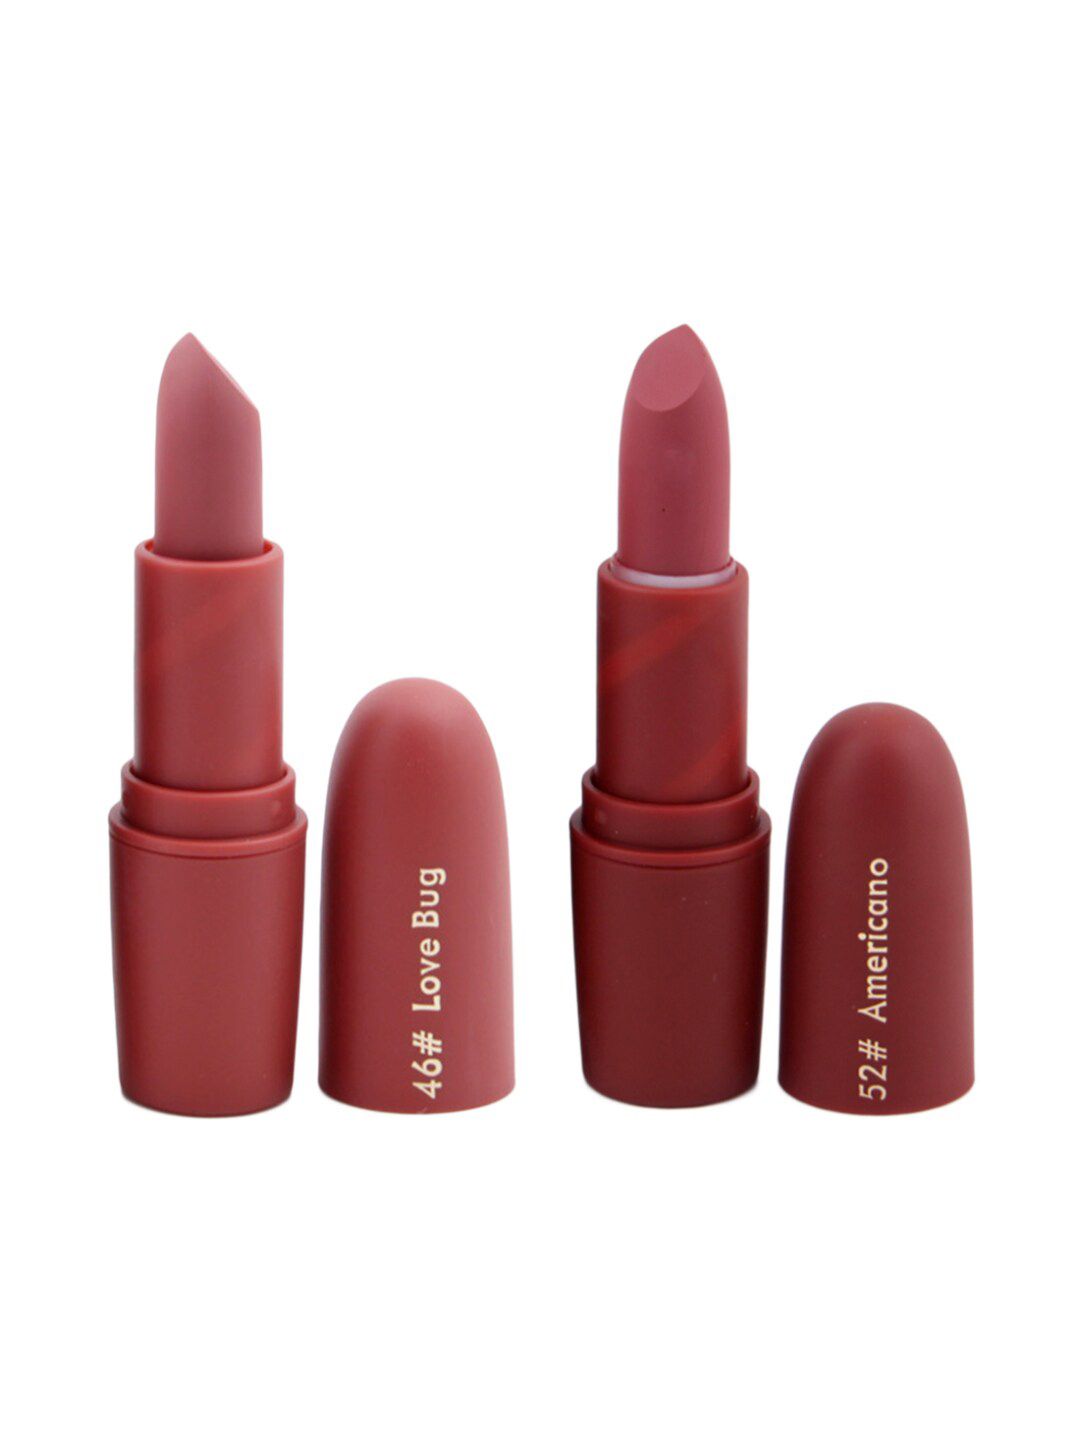 MISS ROSE Set of 2 Matte Creamy Lipsticks - Love Bug 46 & Americano 52 Price in India